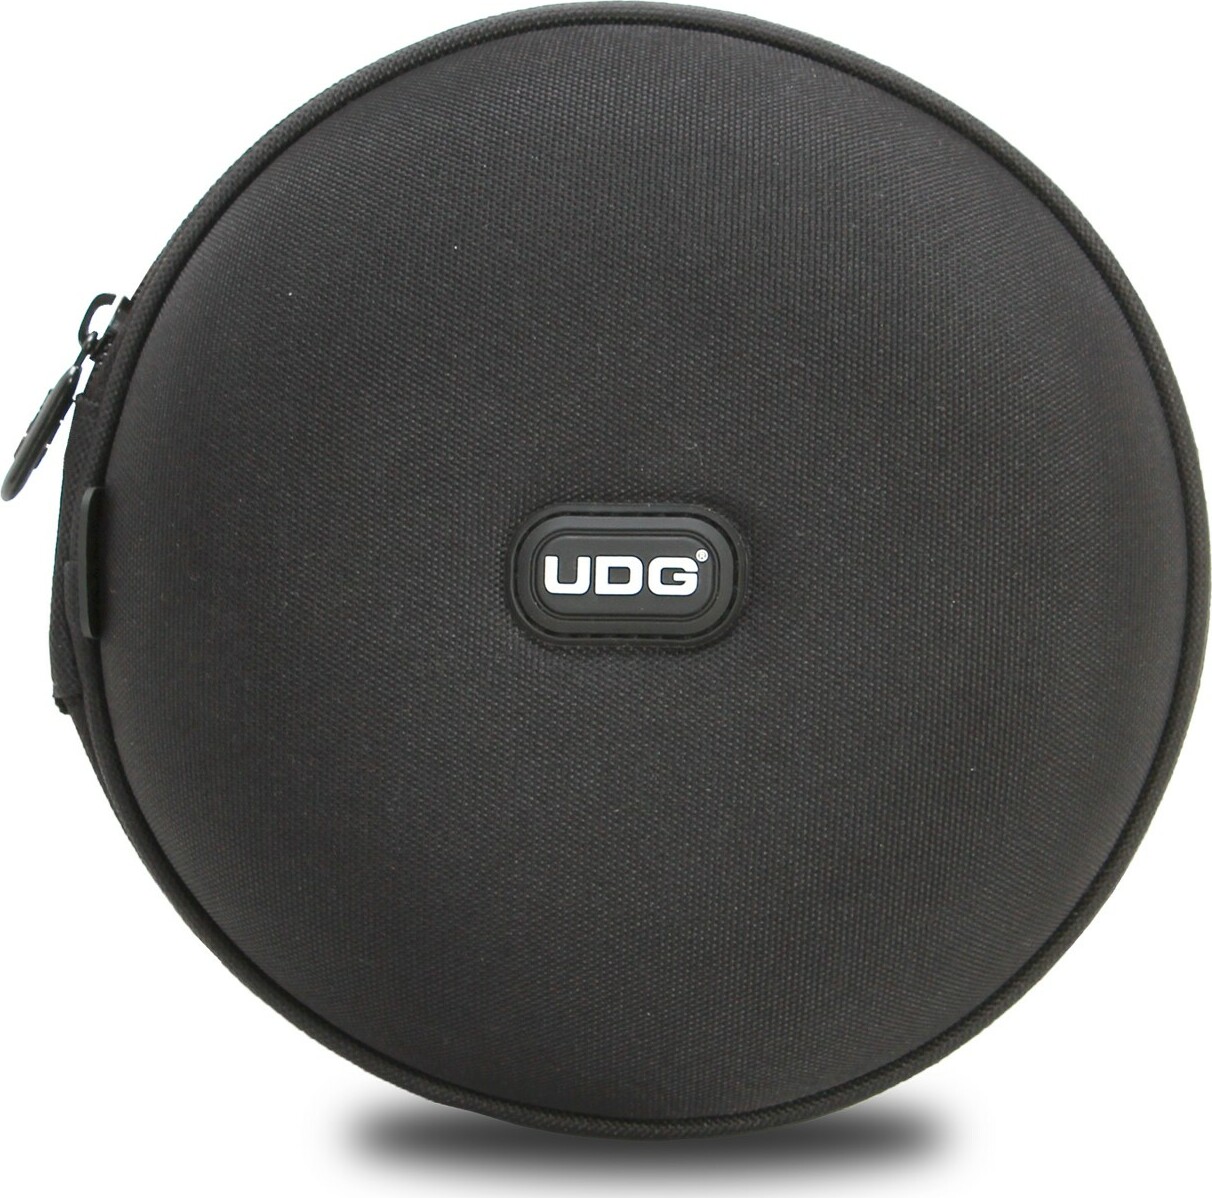 Udg Creator Headphone Hard Case Small Black - DJ Gigbag - Main picture